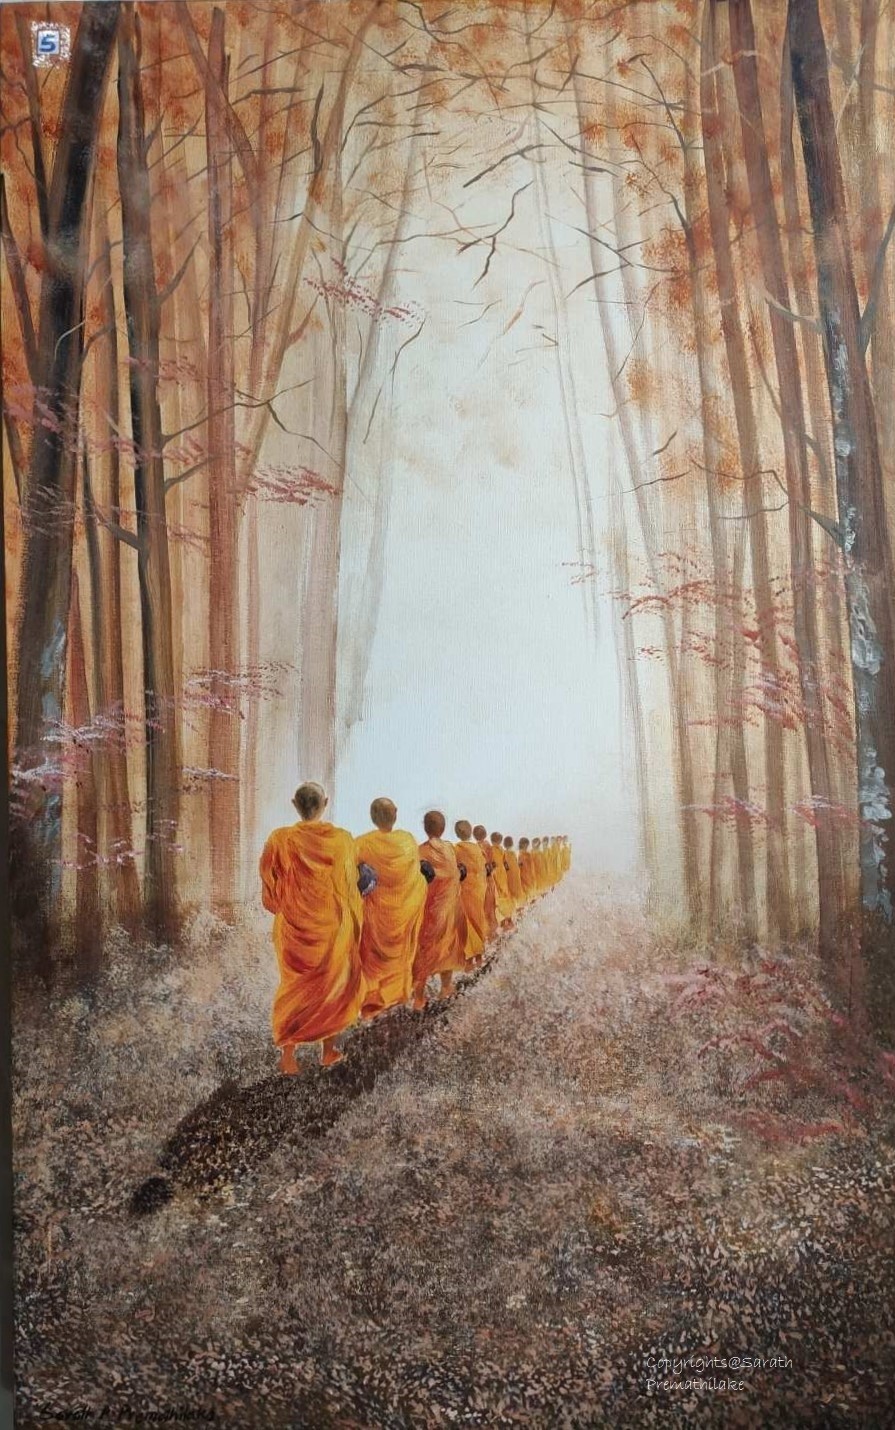 Mindful journey by Sarath Premathilake